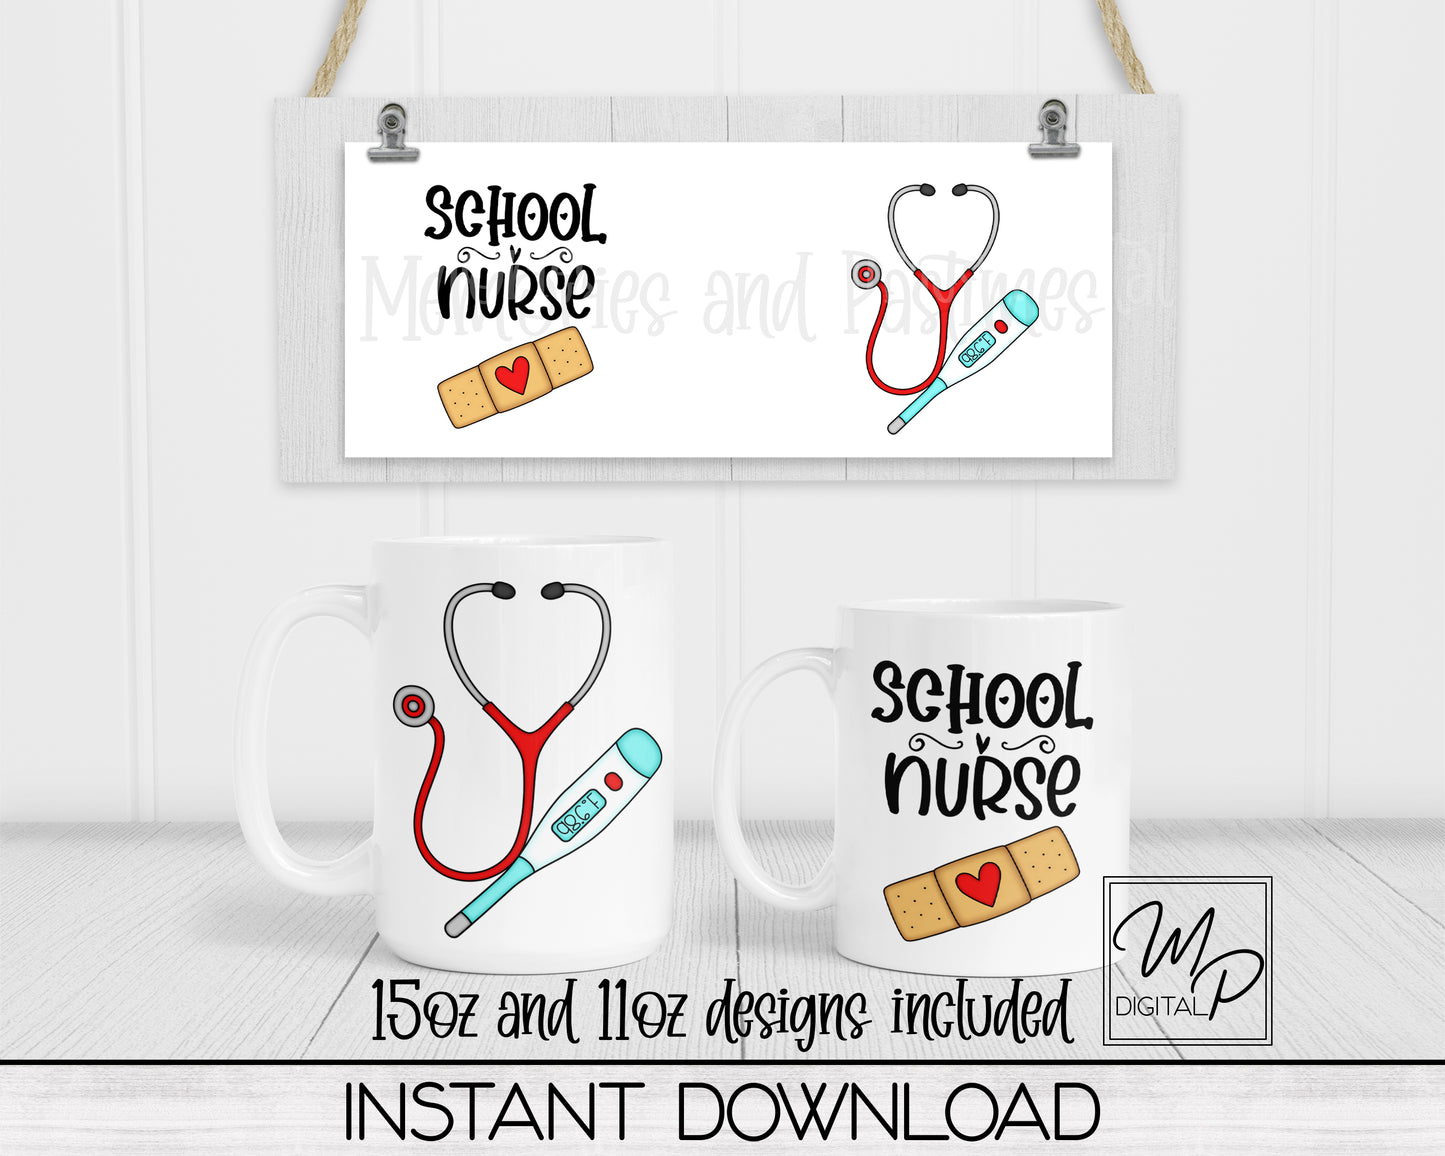 School Nurse Coffee Mug Sublimation Design PNG Digital Download - 11oz and 15oz